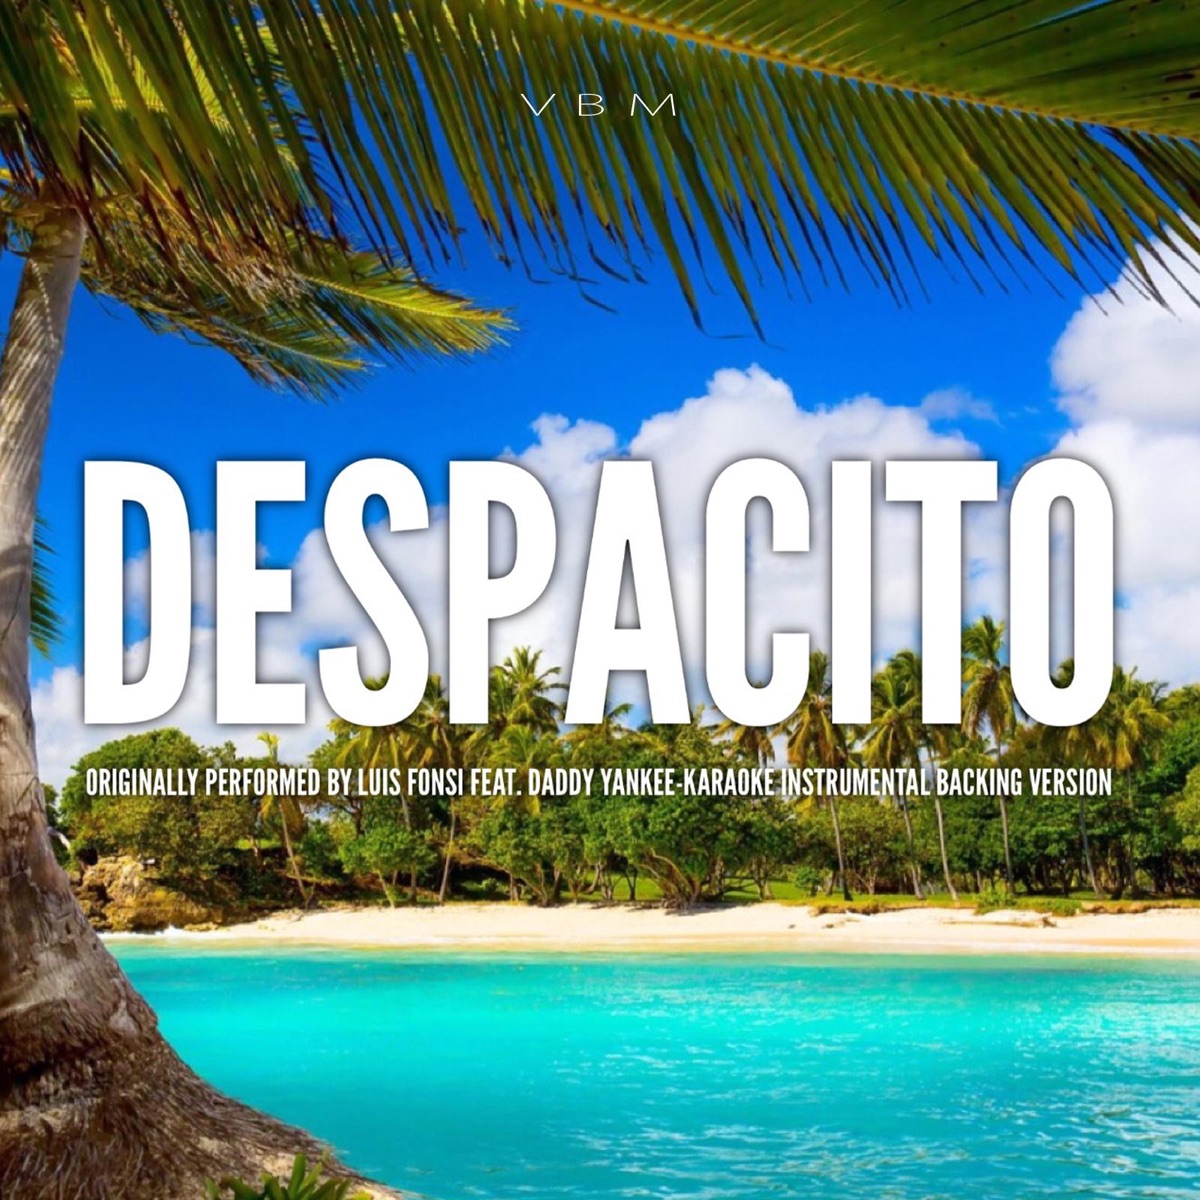 Despacito (Originally Performed by Luis Fonsi feat. Daddy Yankee) [Karaoke  Instrumental Version] - Single by Vbm on Apple Music